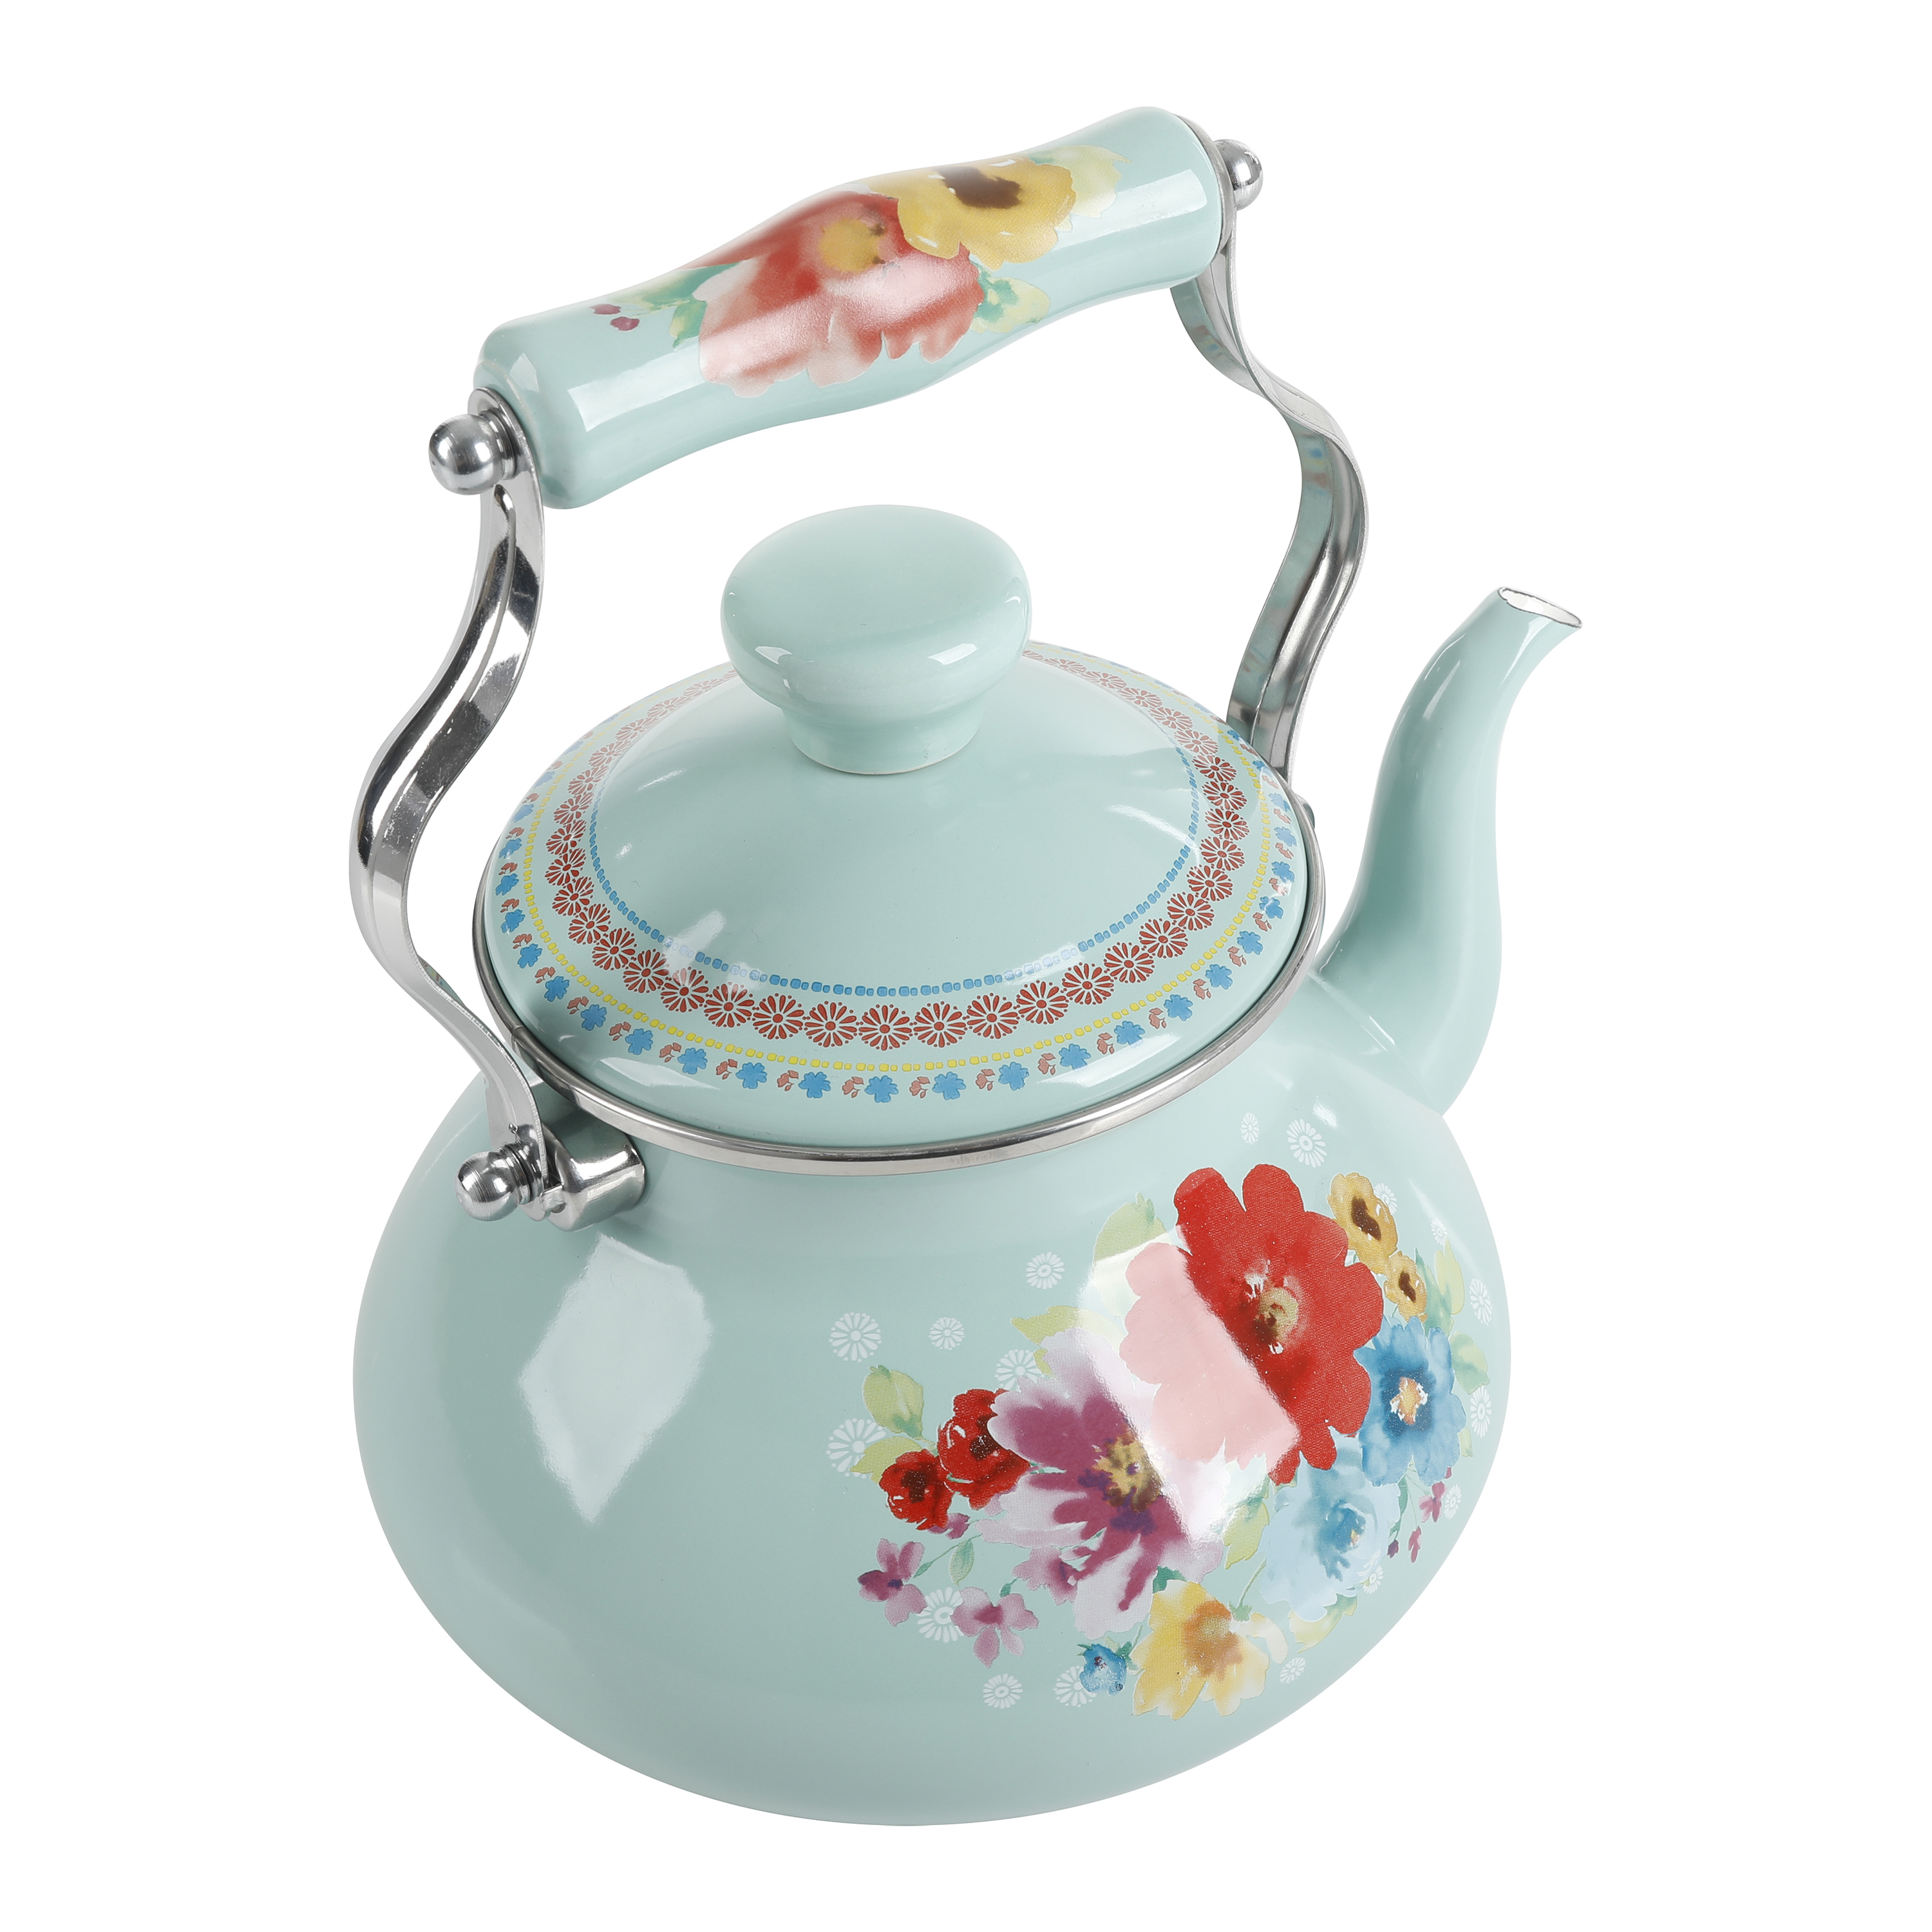 The Pioneer Woman Breezy Blossom Enamel on Steel 1.9-Quart Tea Kettle - image 5 of 7